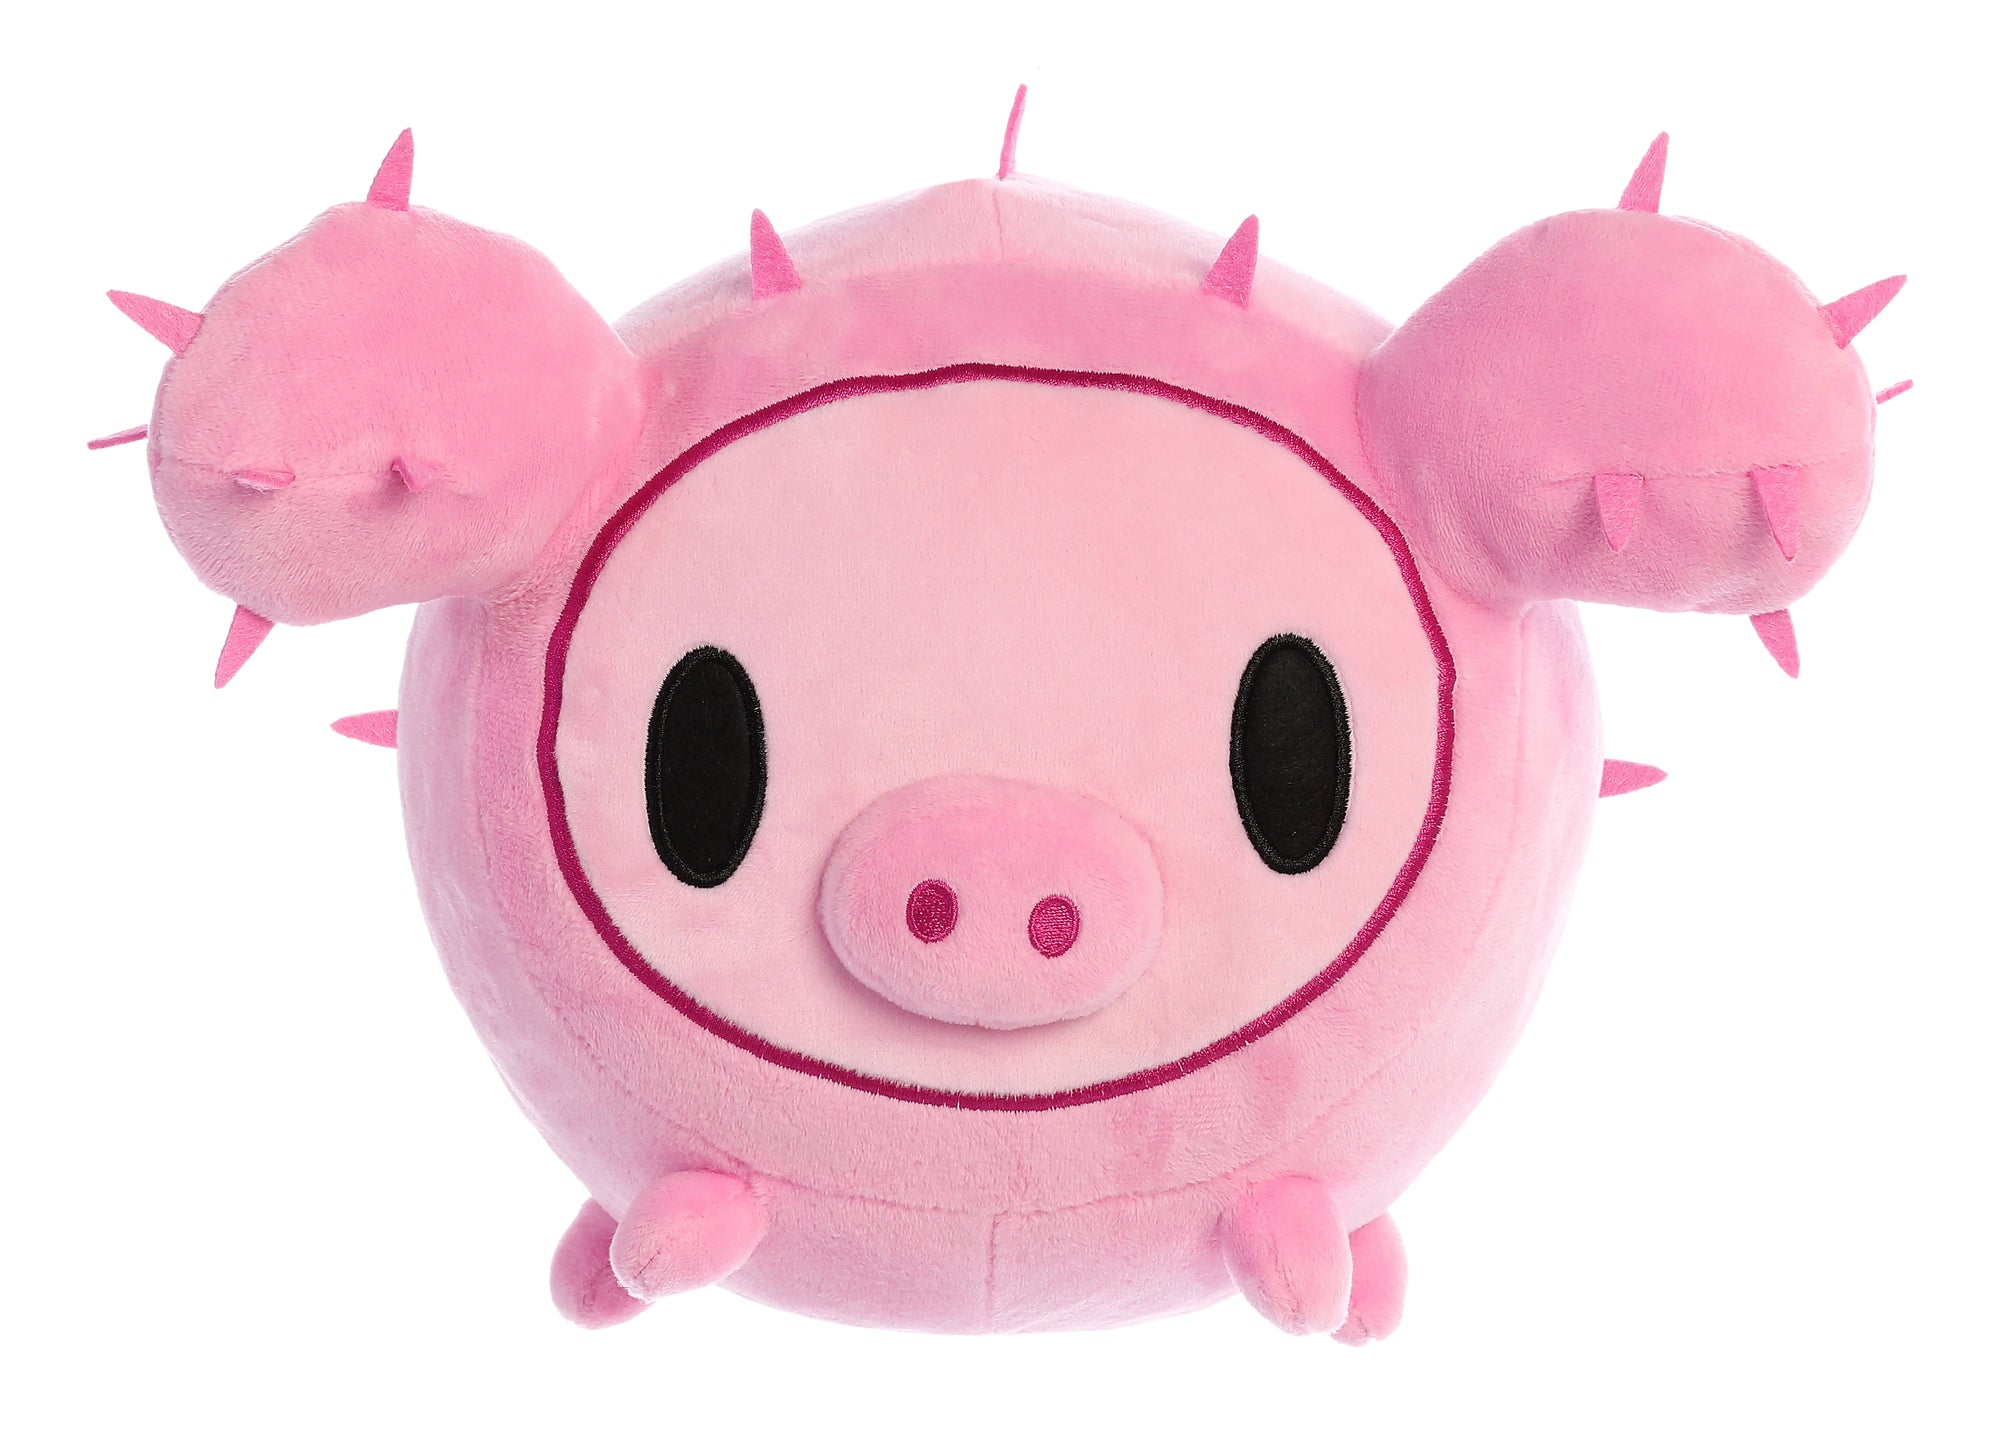 Porcino Pig 10" Inch Plush Toy by Tokidoki x Aurora